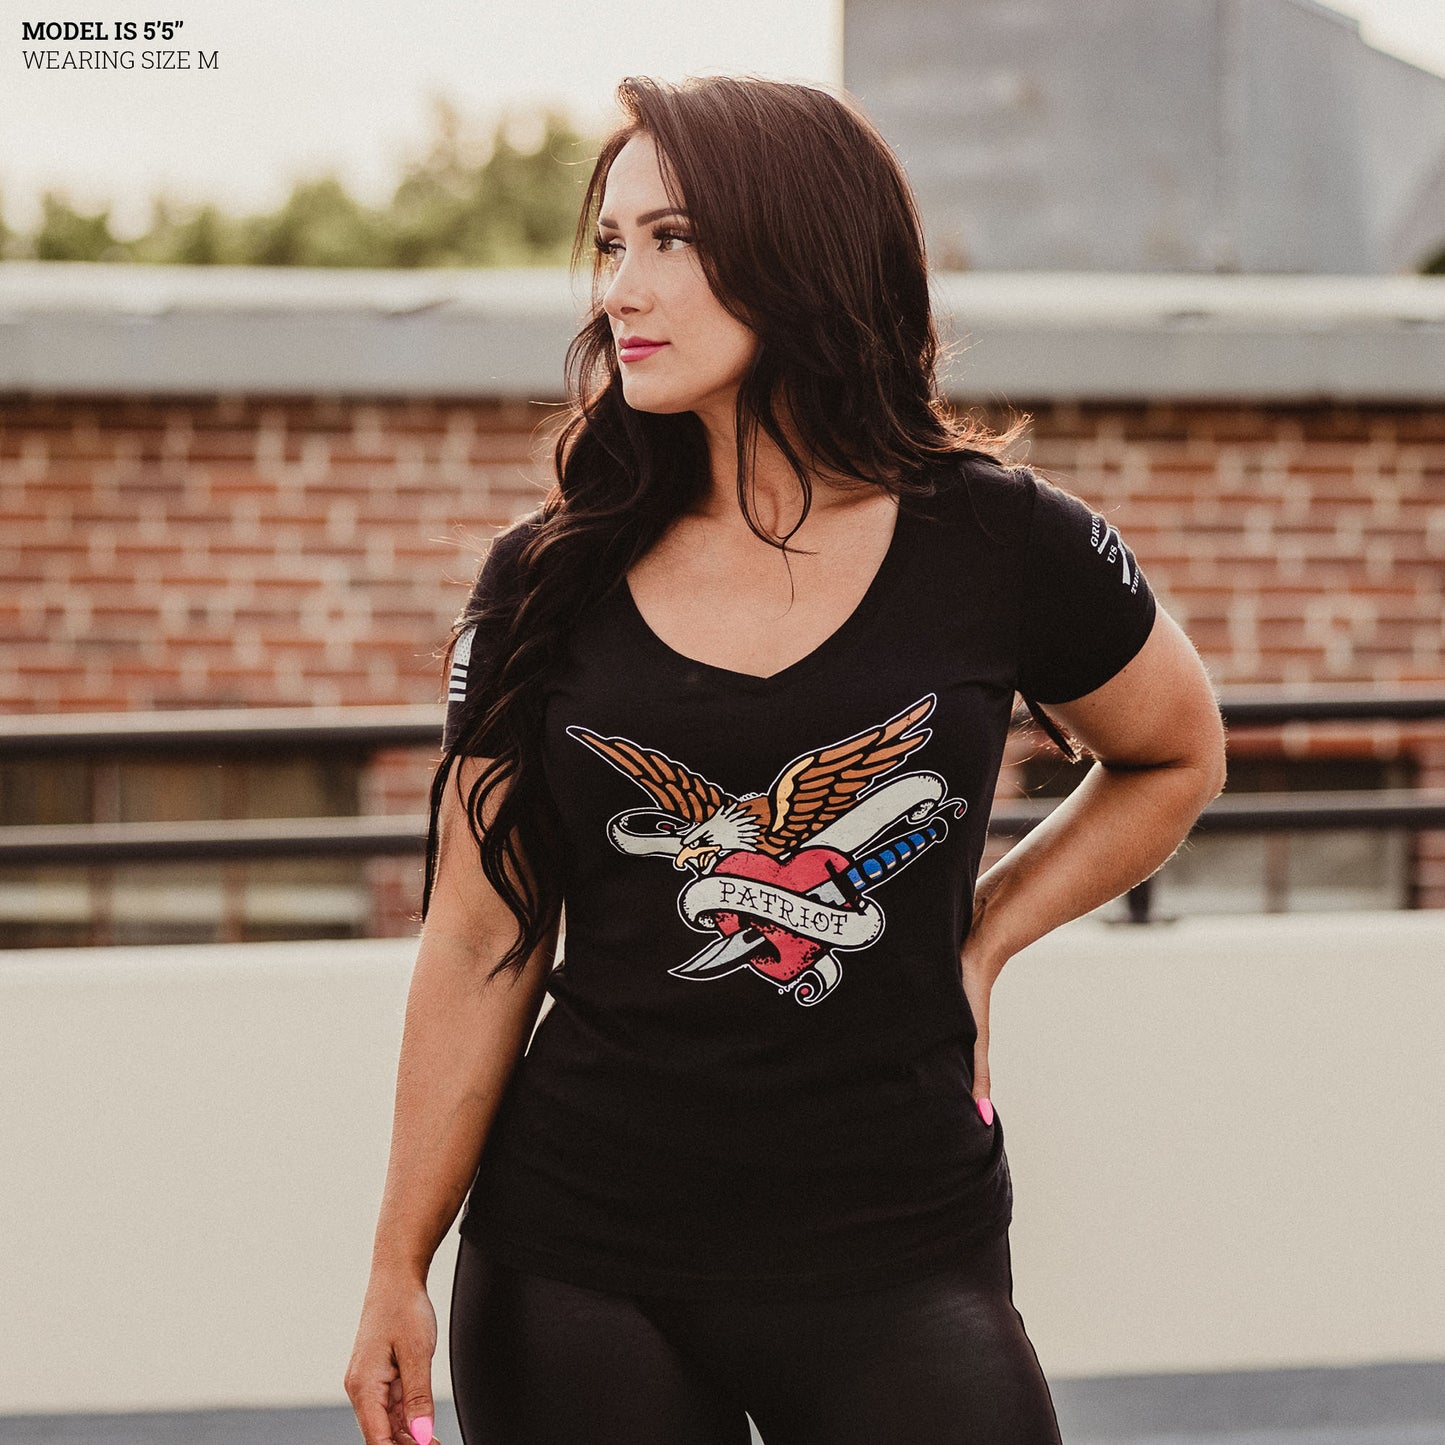 Patriotic Tops for Women - Patriot American Flag Shirt